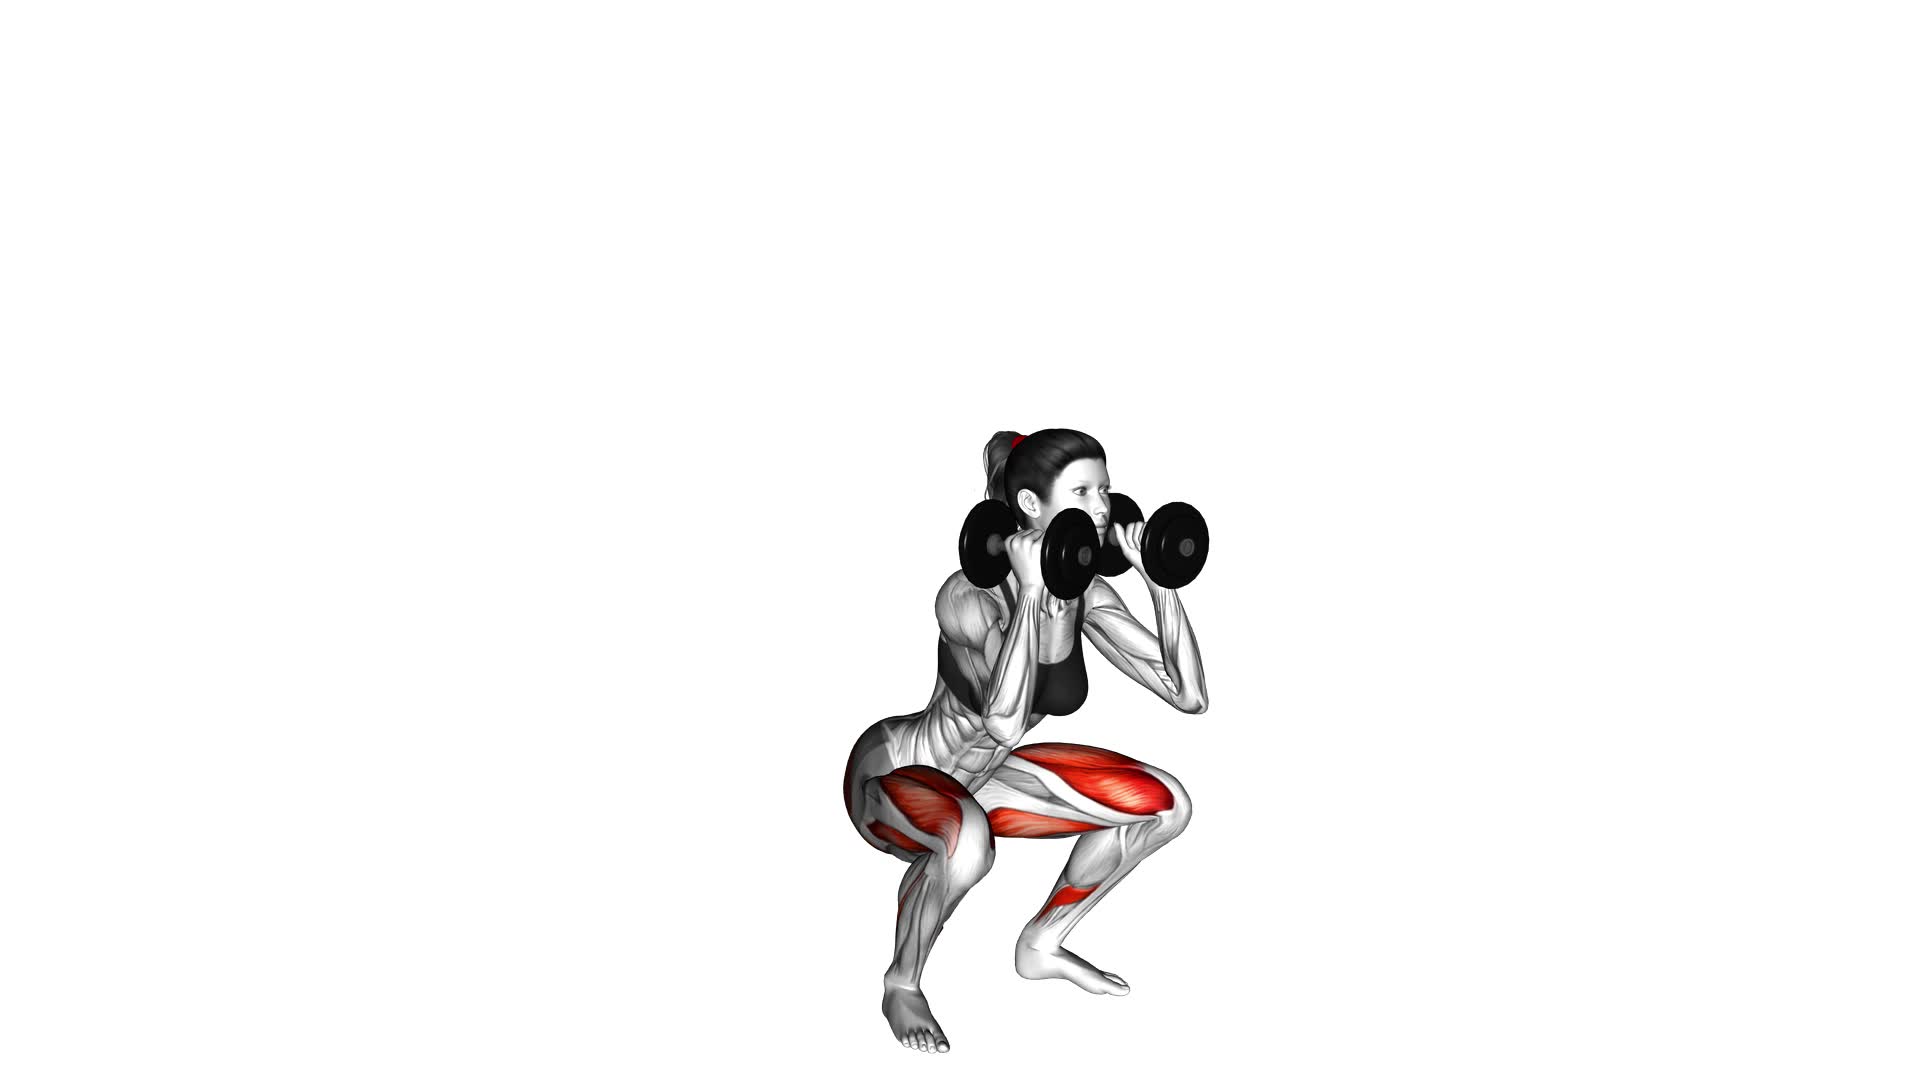 Dumbbell Front Squat (female) - Video Exercise Guide & Tips